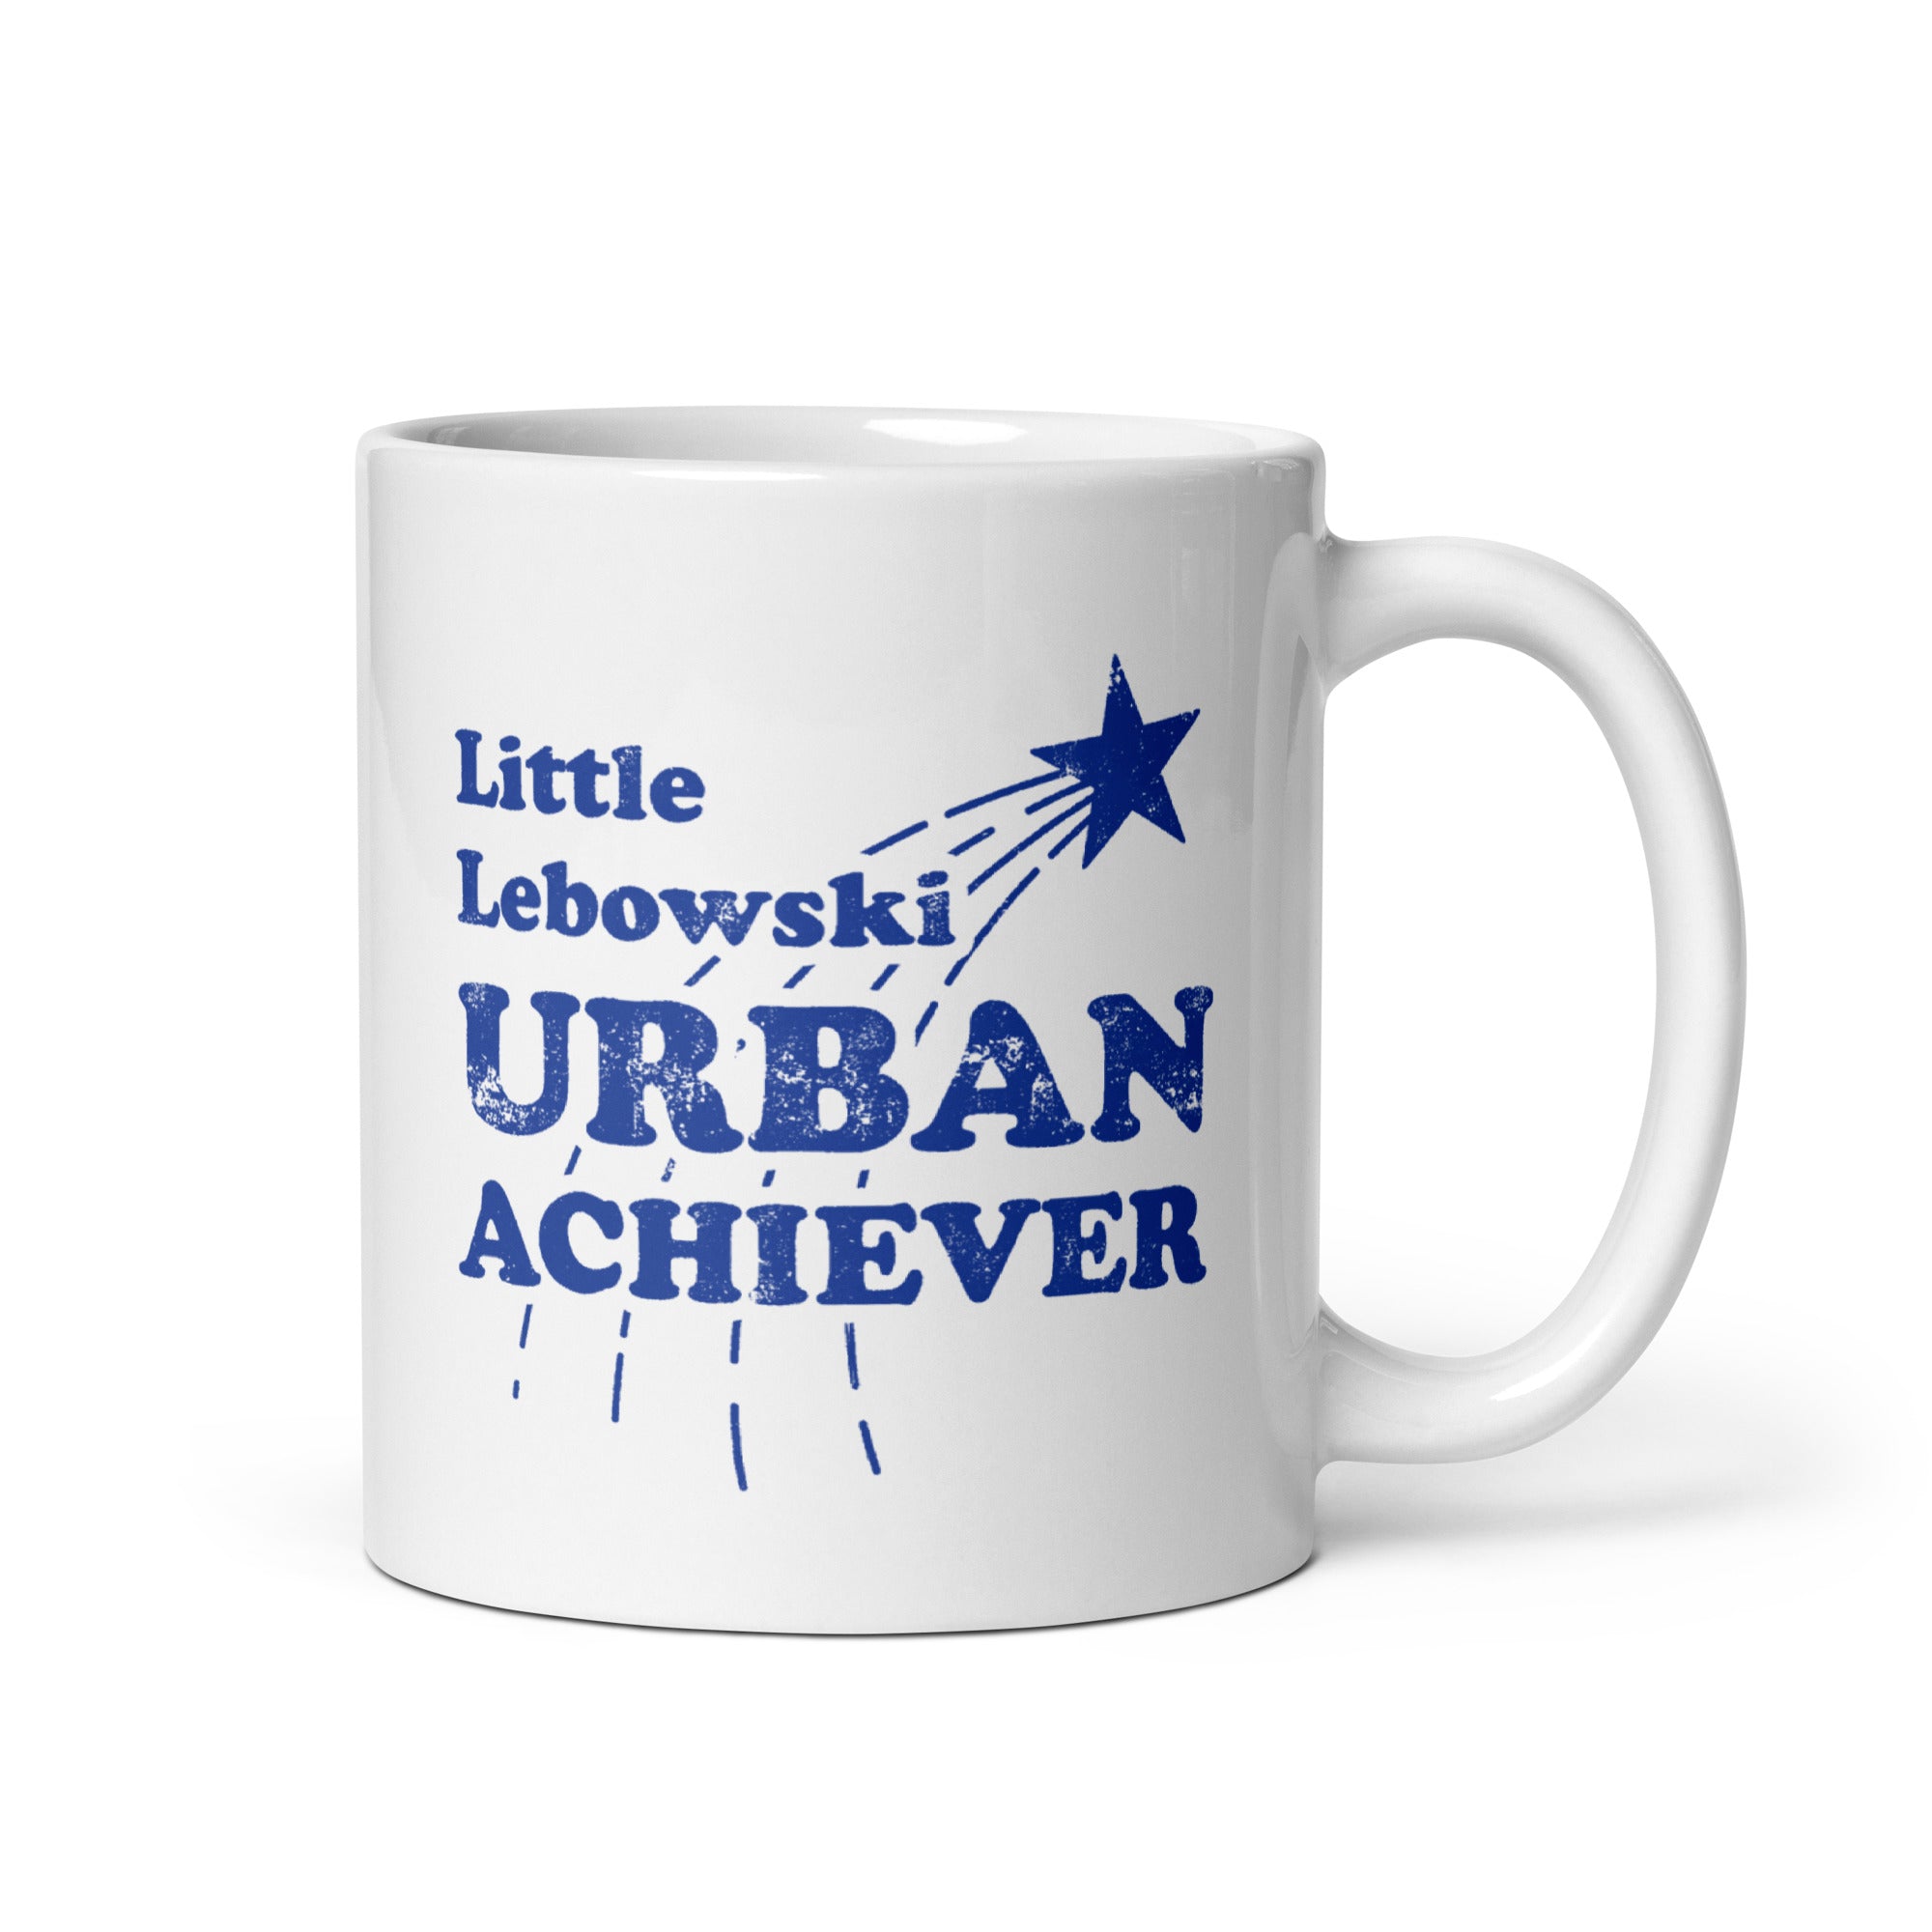 Little Lebowski Urban Achiever - 11oz Coffee Mug